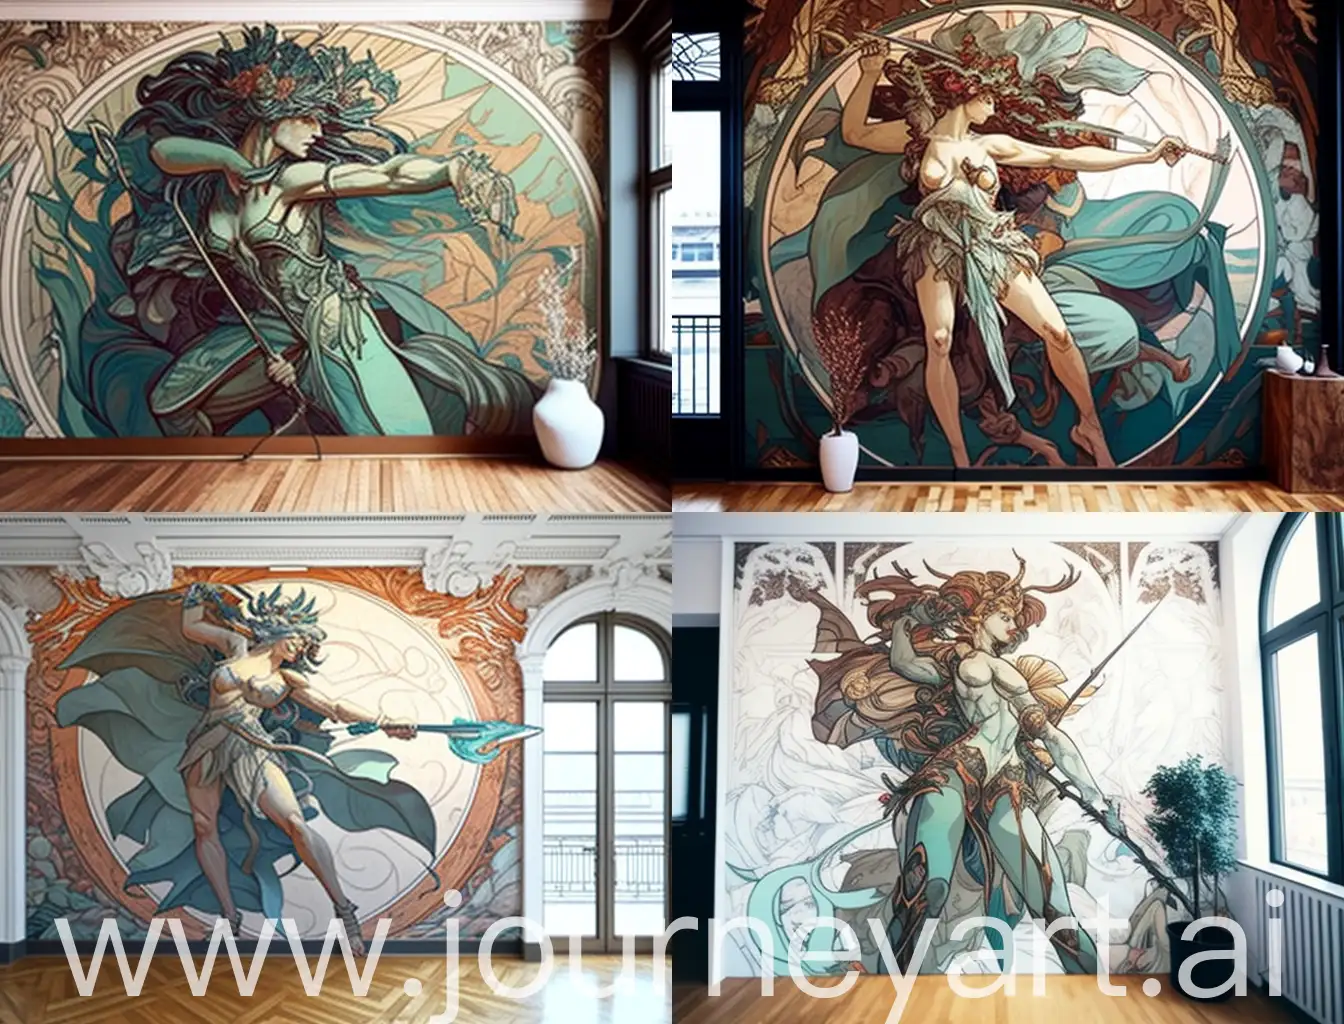 Art-Nouveau-Mural-Warrior-Battling-Monster-in-Armor-with-Spear